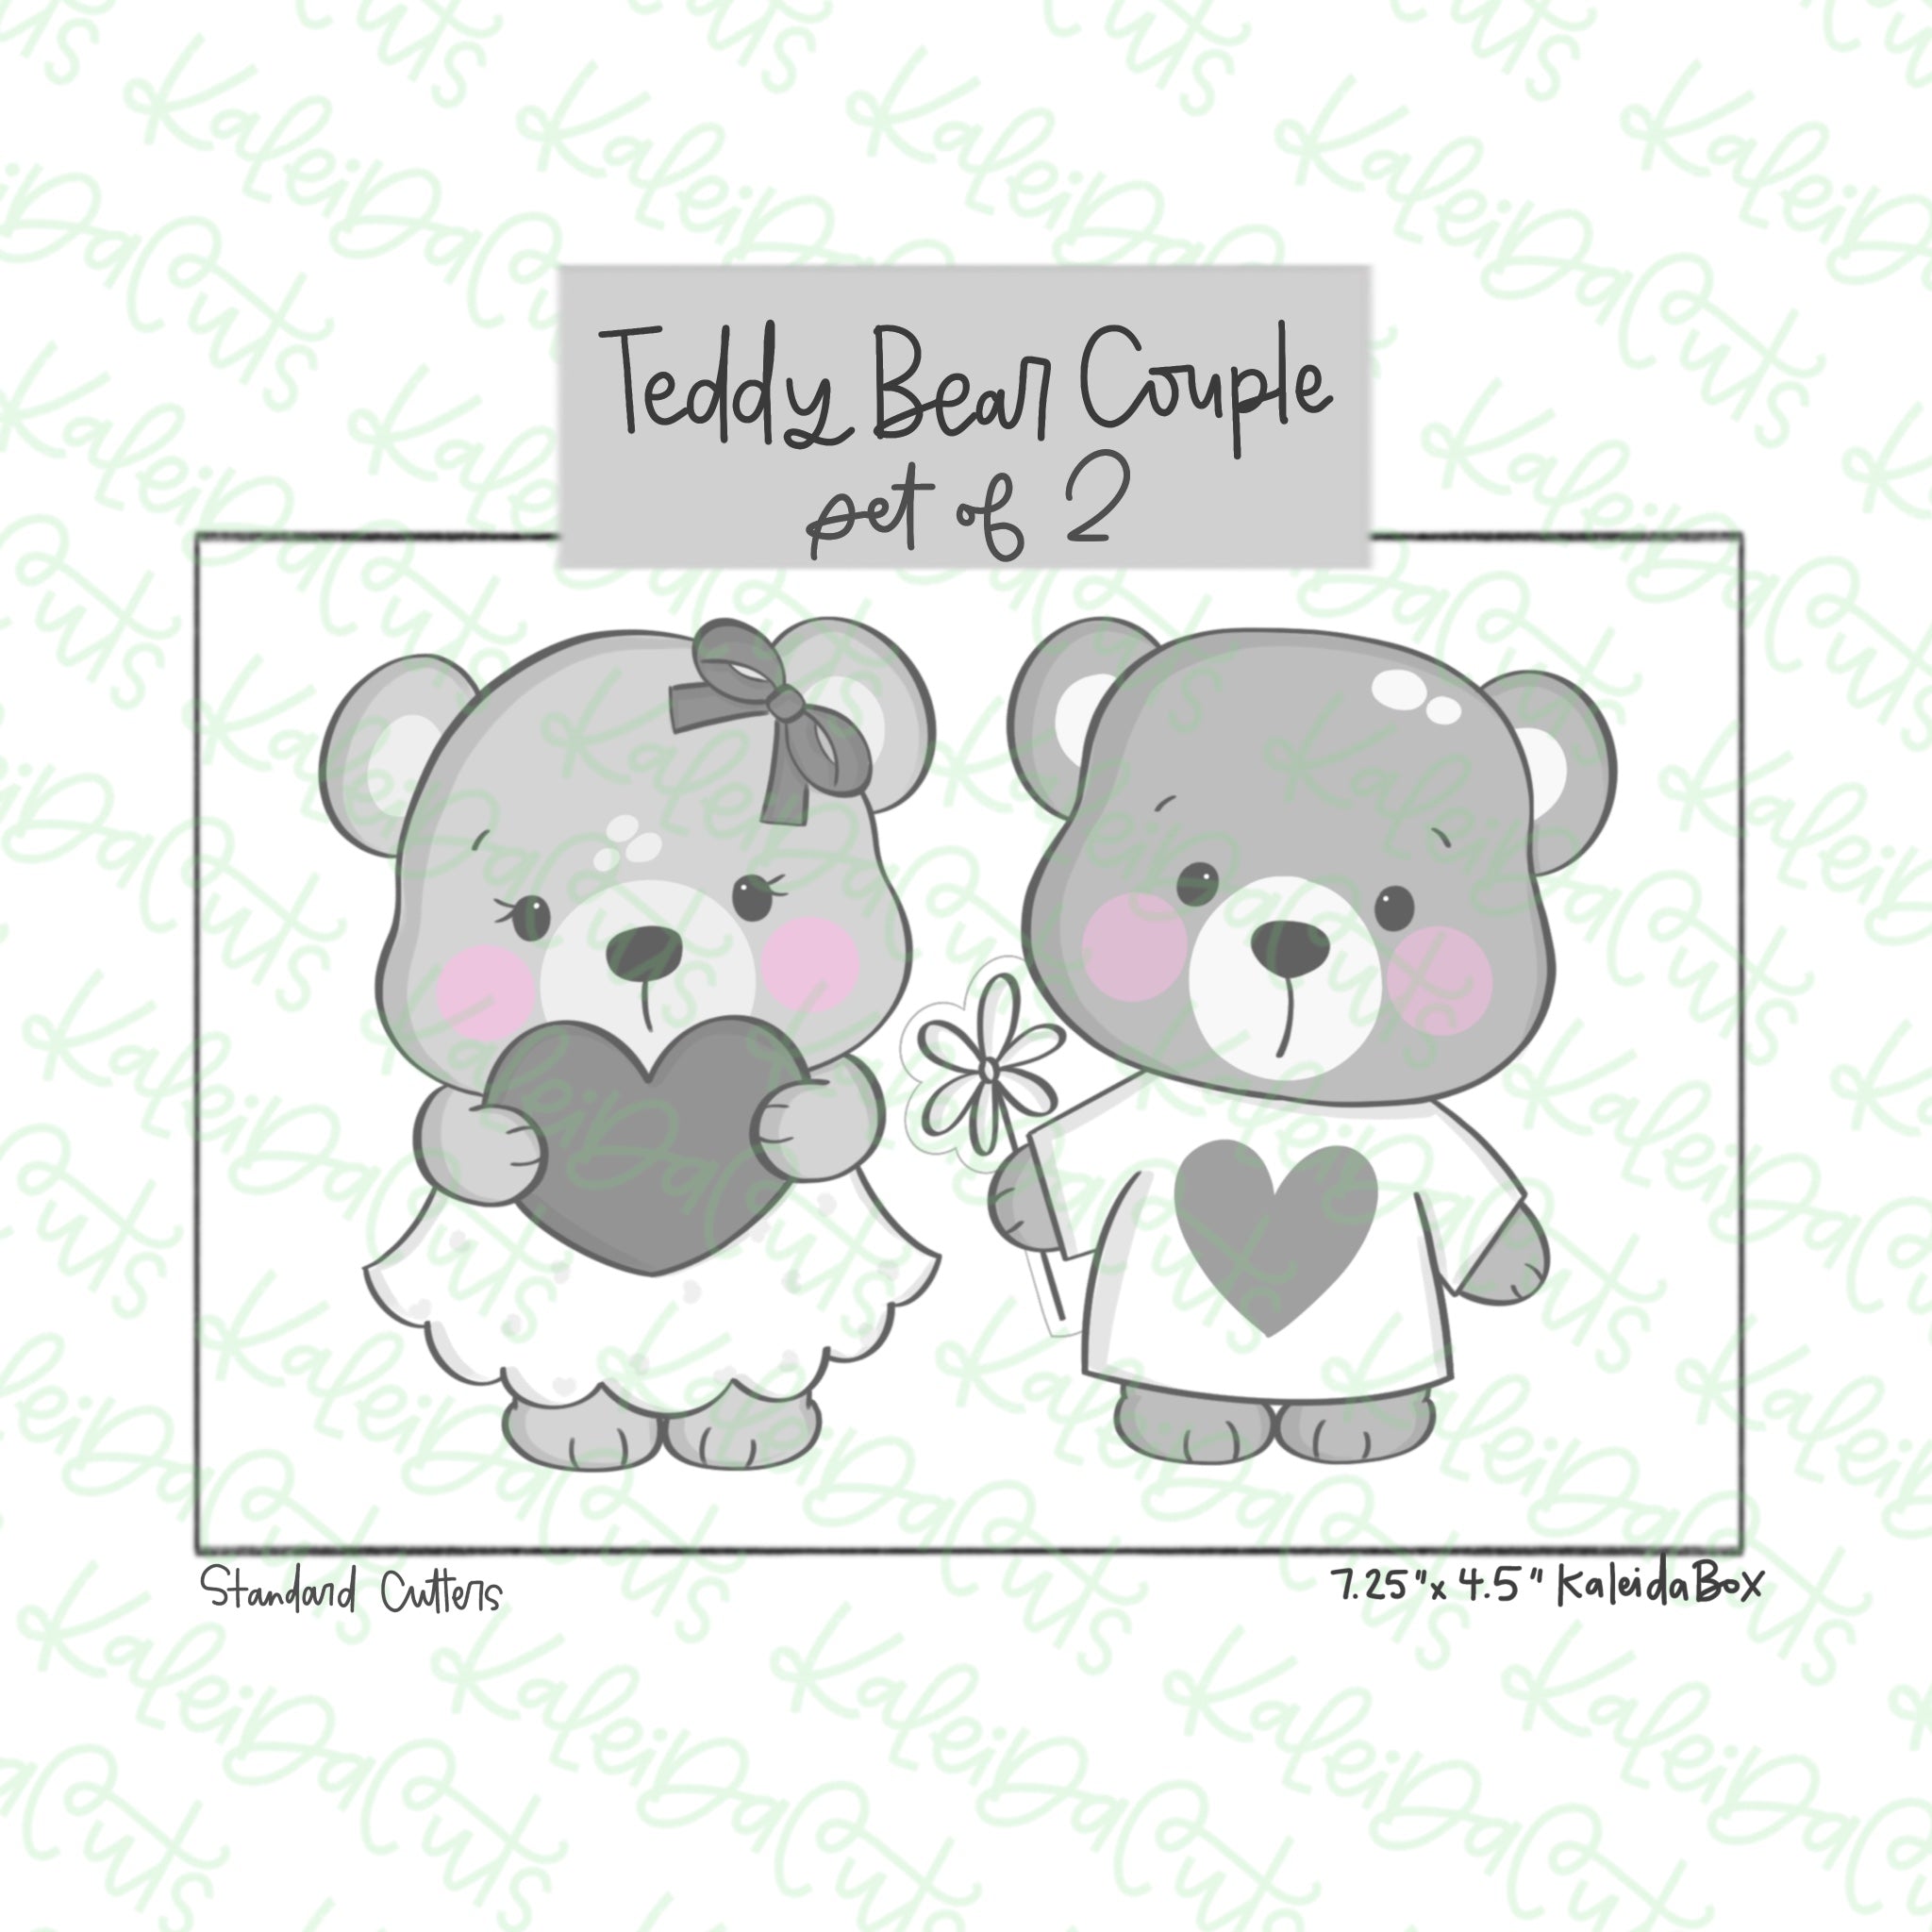 Teddy Bear Cookie Cutter